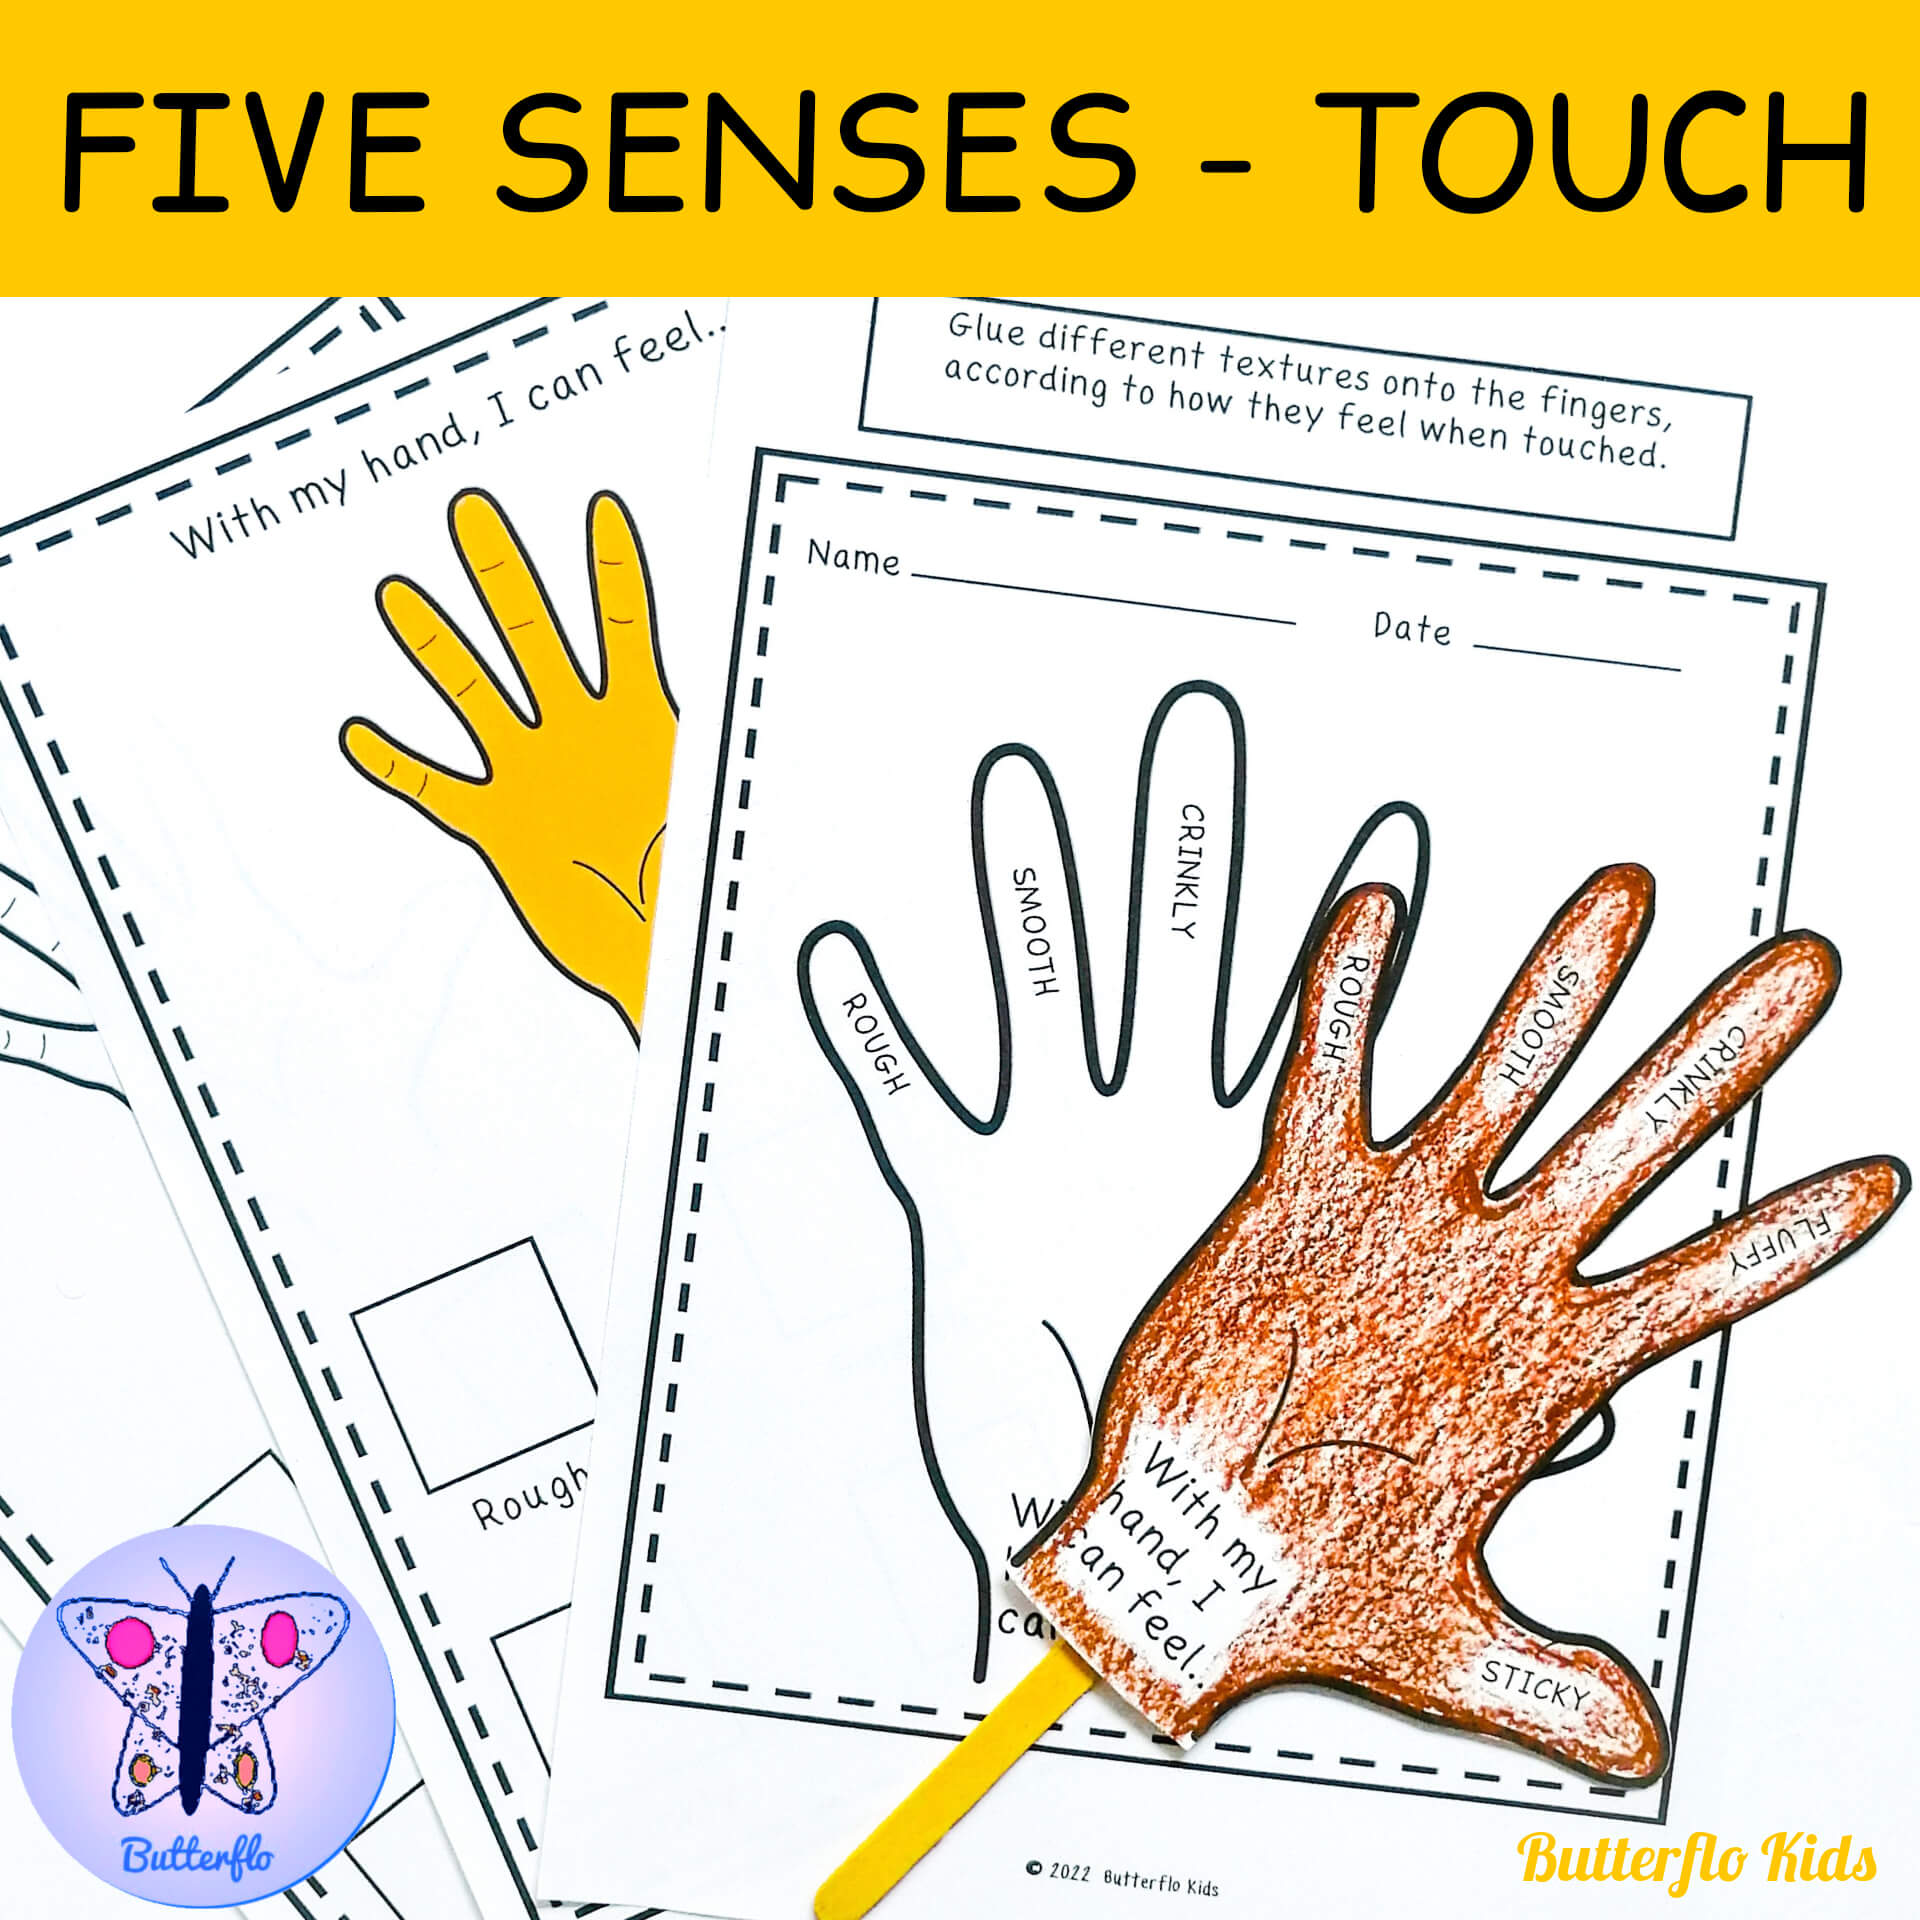 The Five Senses (Touch) - Butterflo Kids